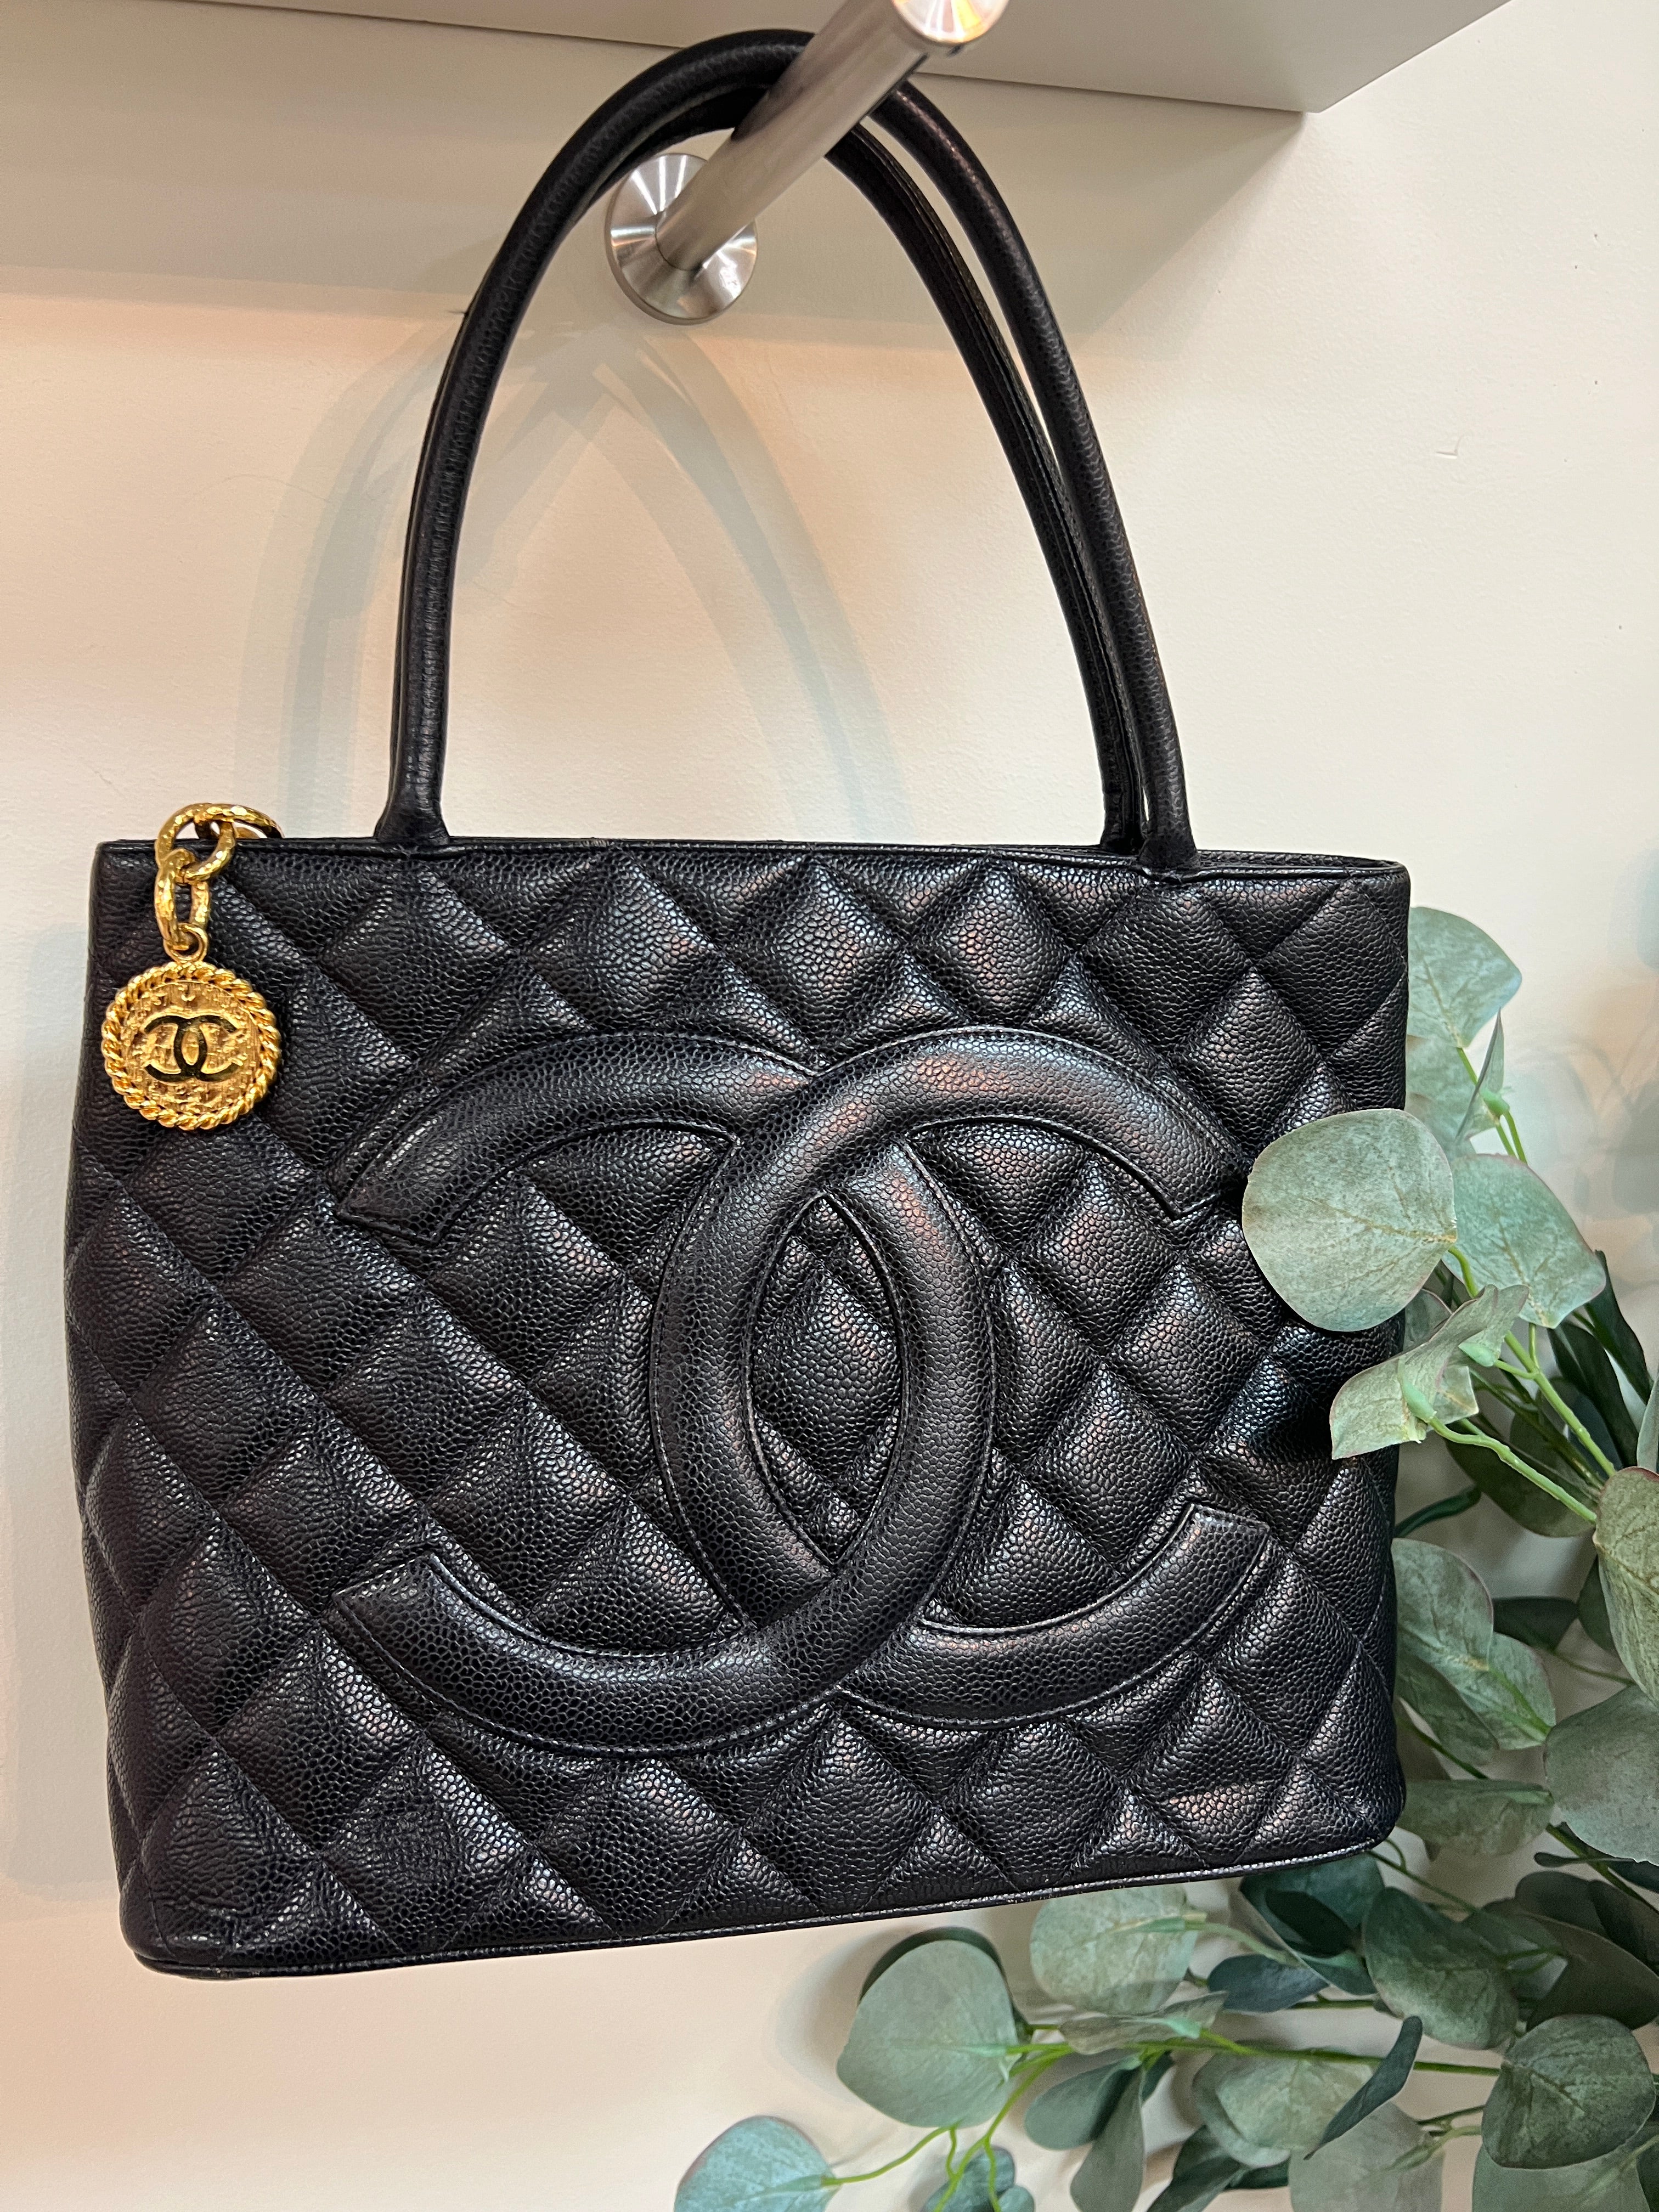 Chanel Caviar Medallion Tote - Totes, Handbags